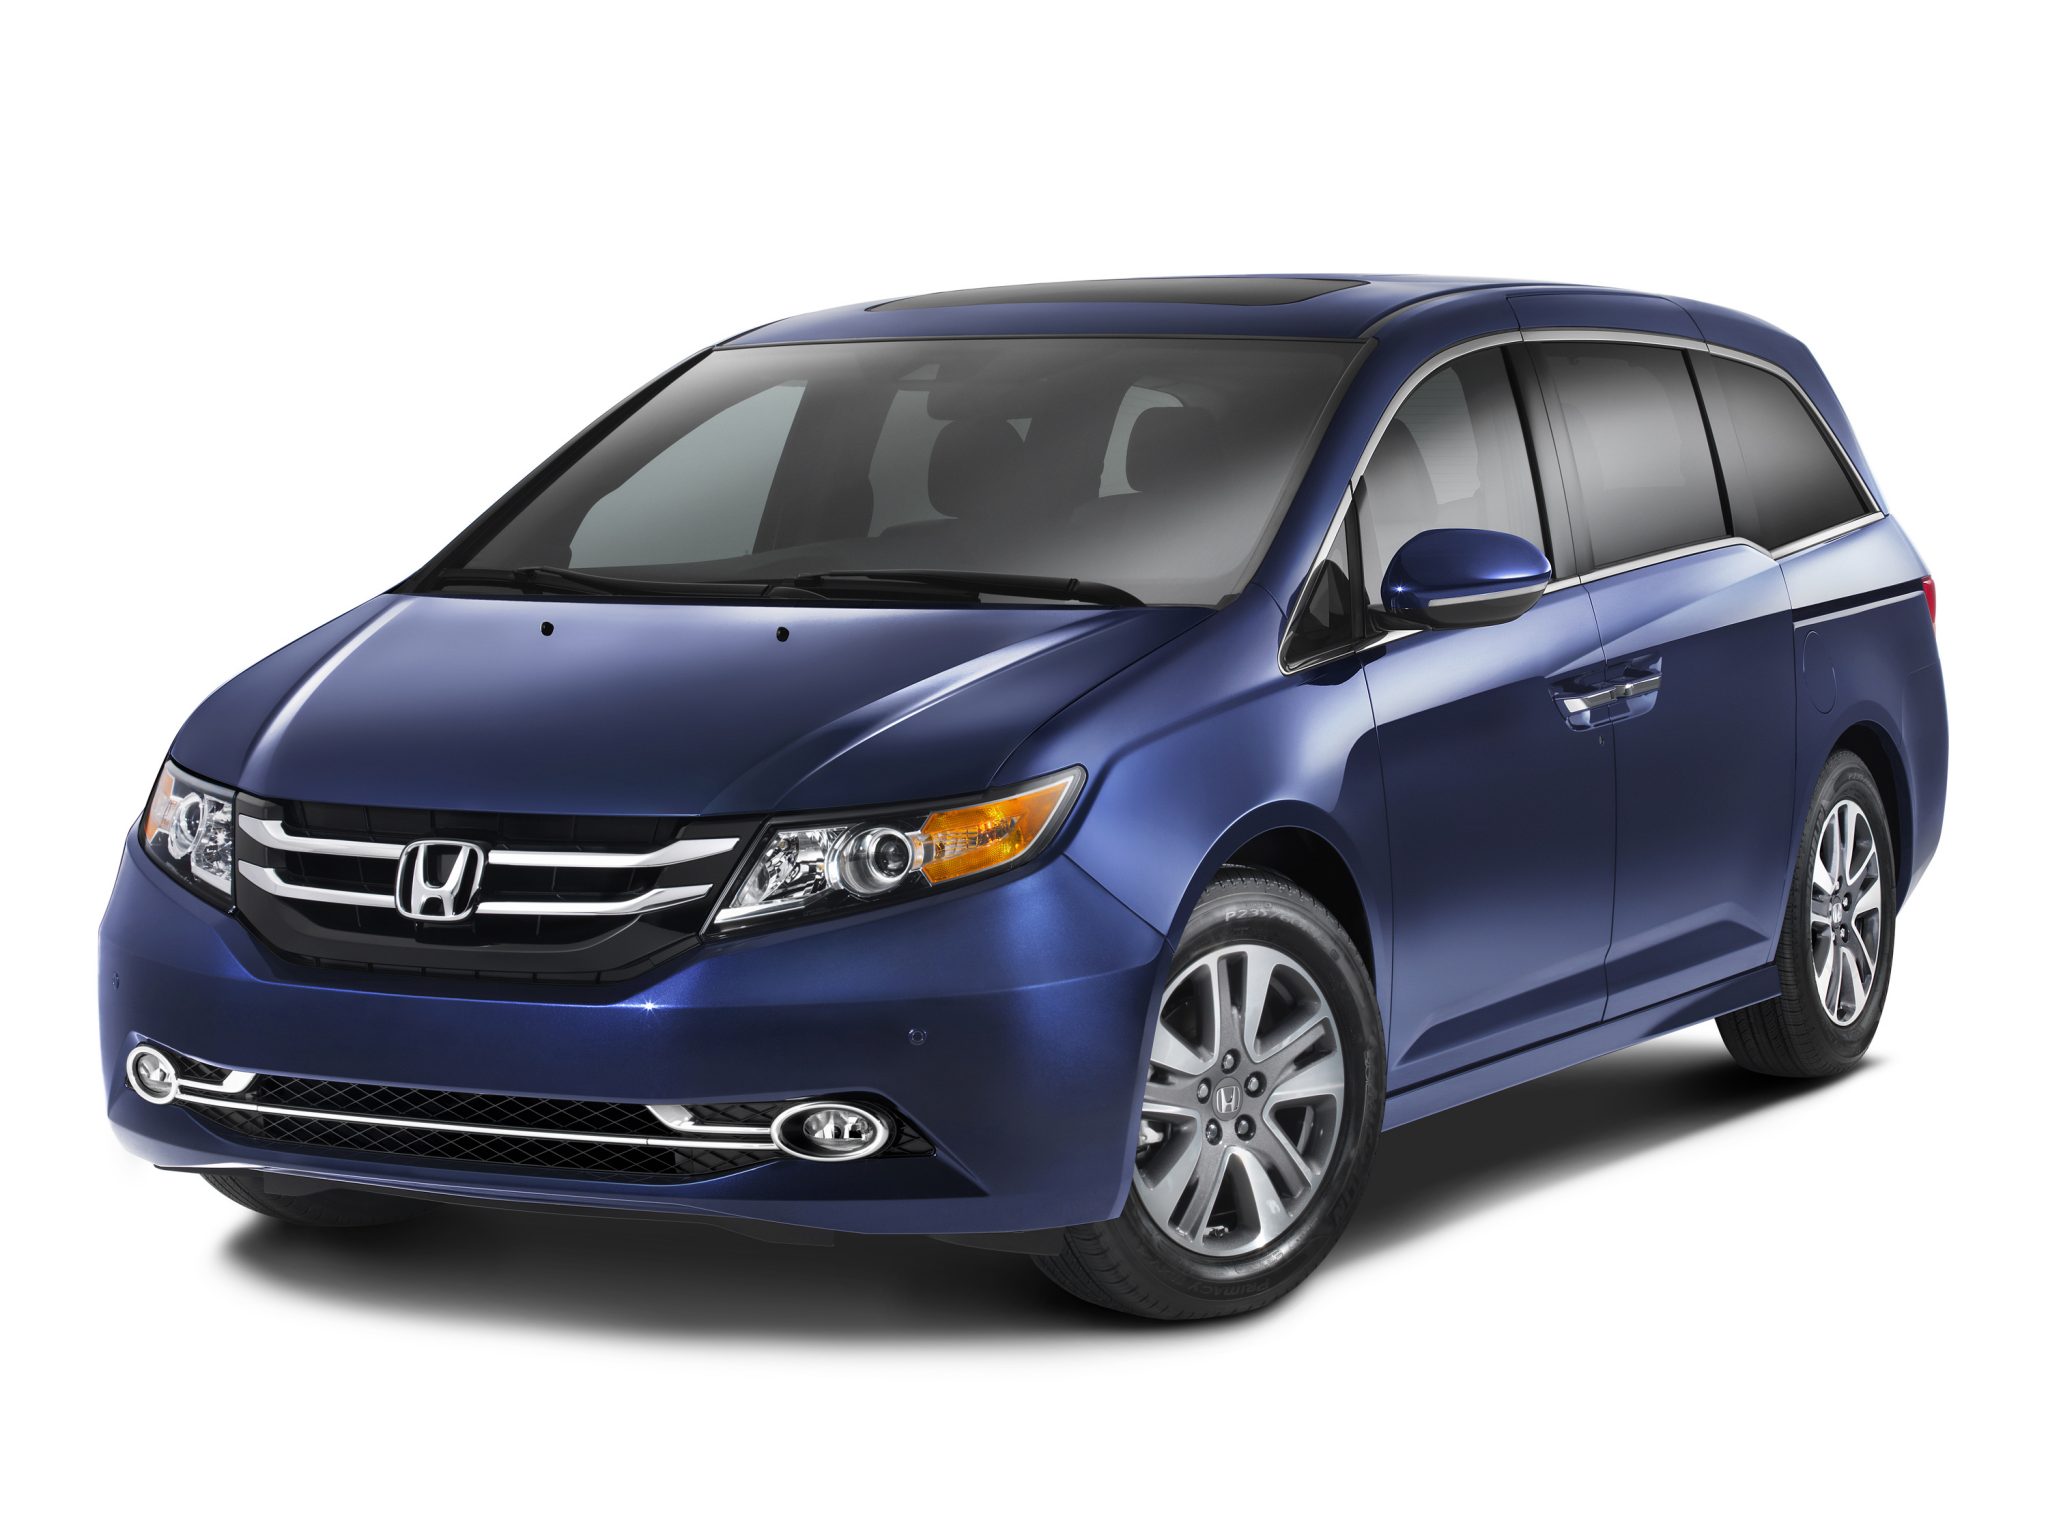 2015 Honda Odyssey pricing